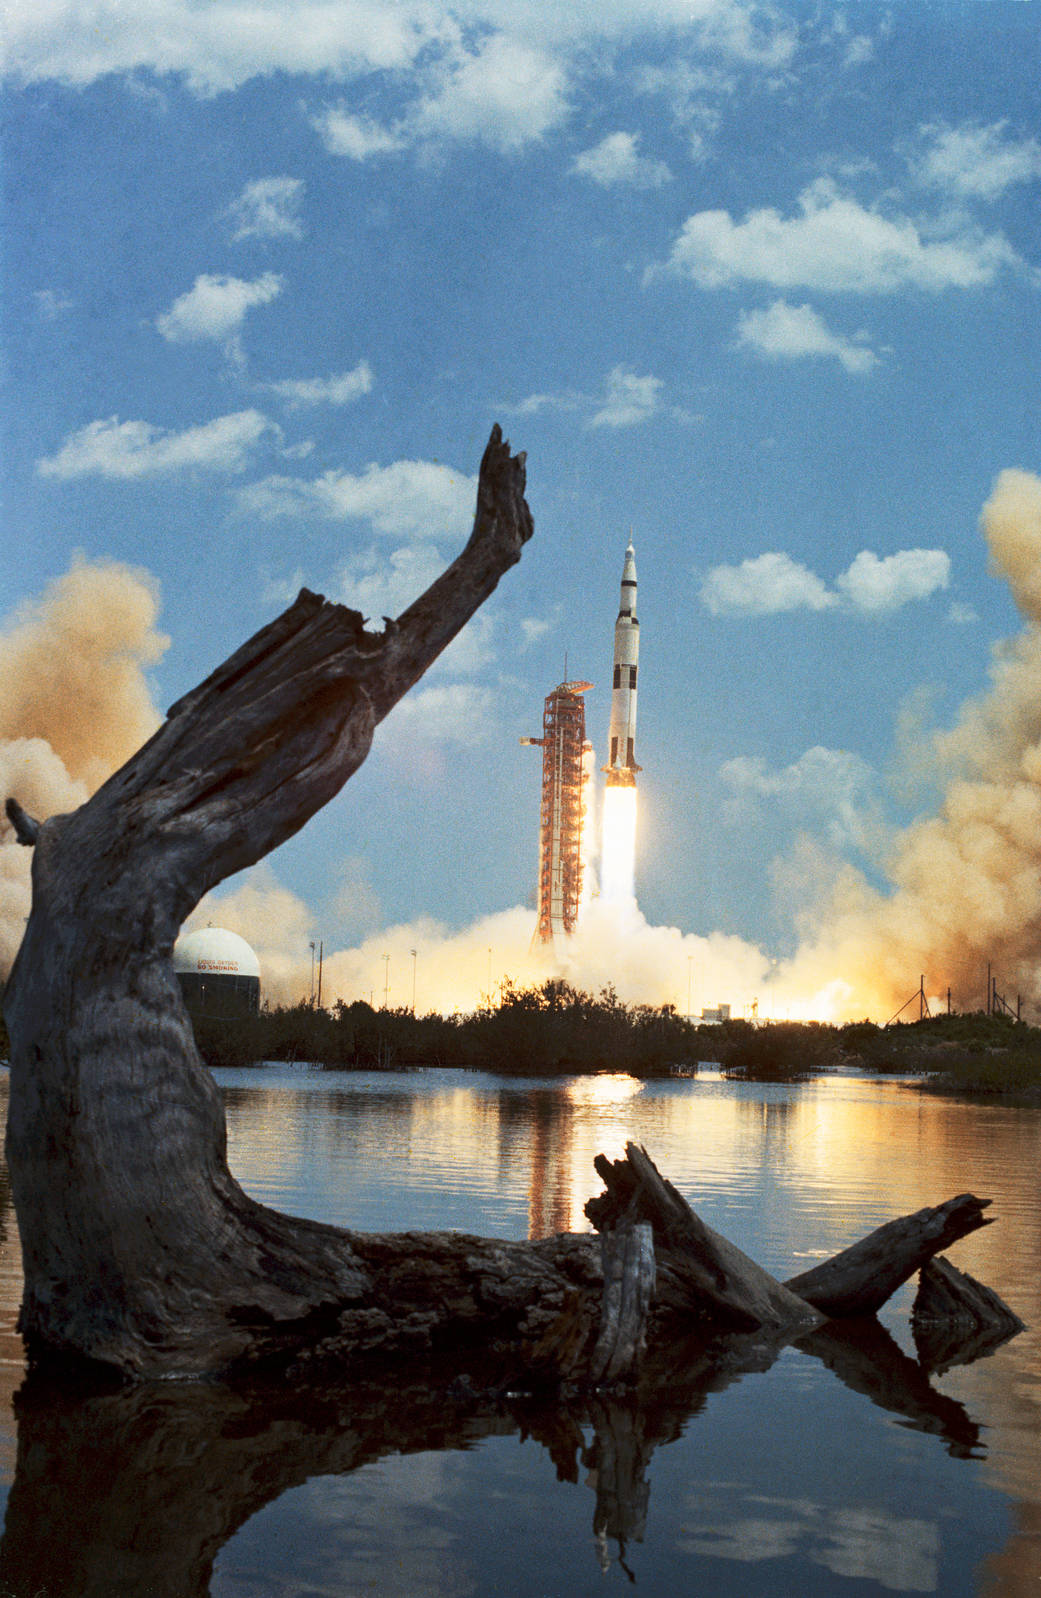 Liftoff of Saturn rocket on Apollo 16 mission